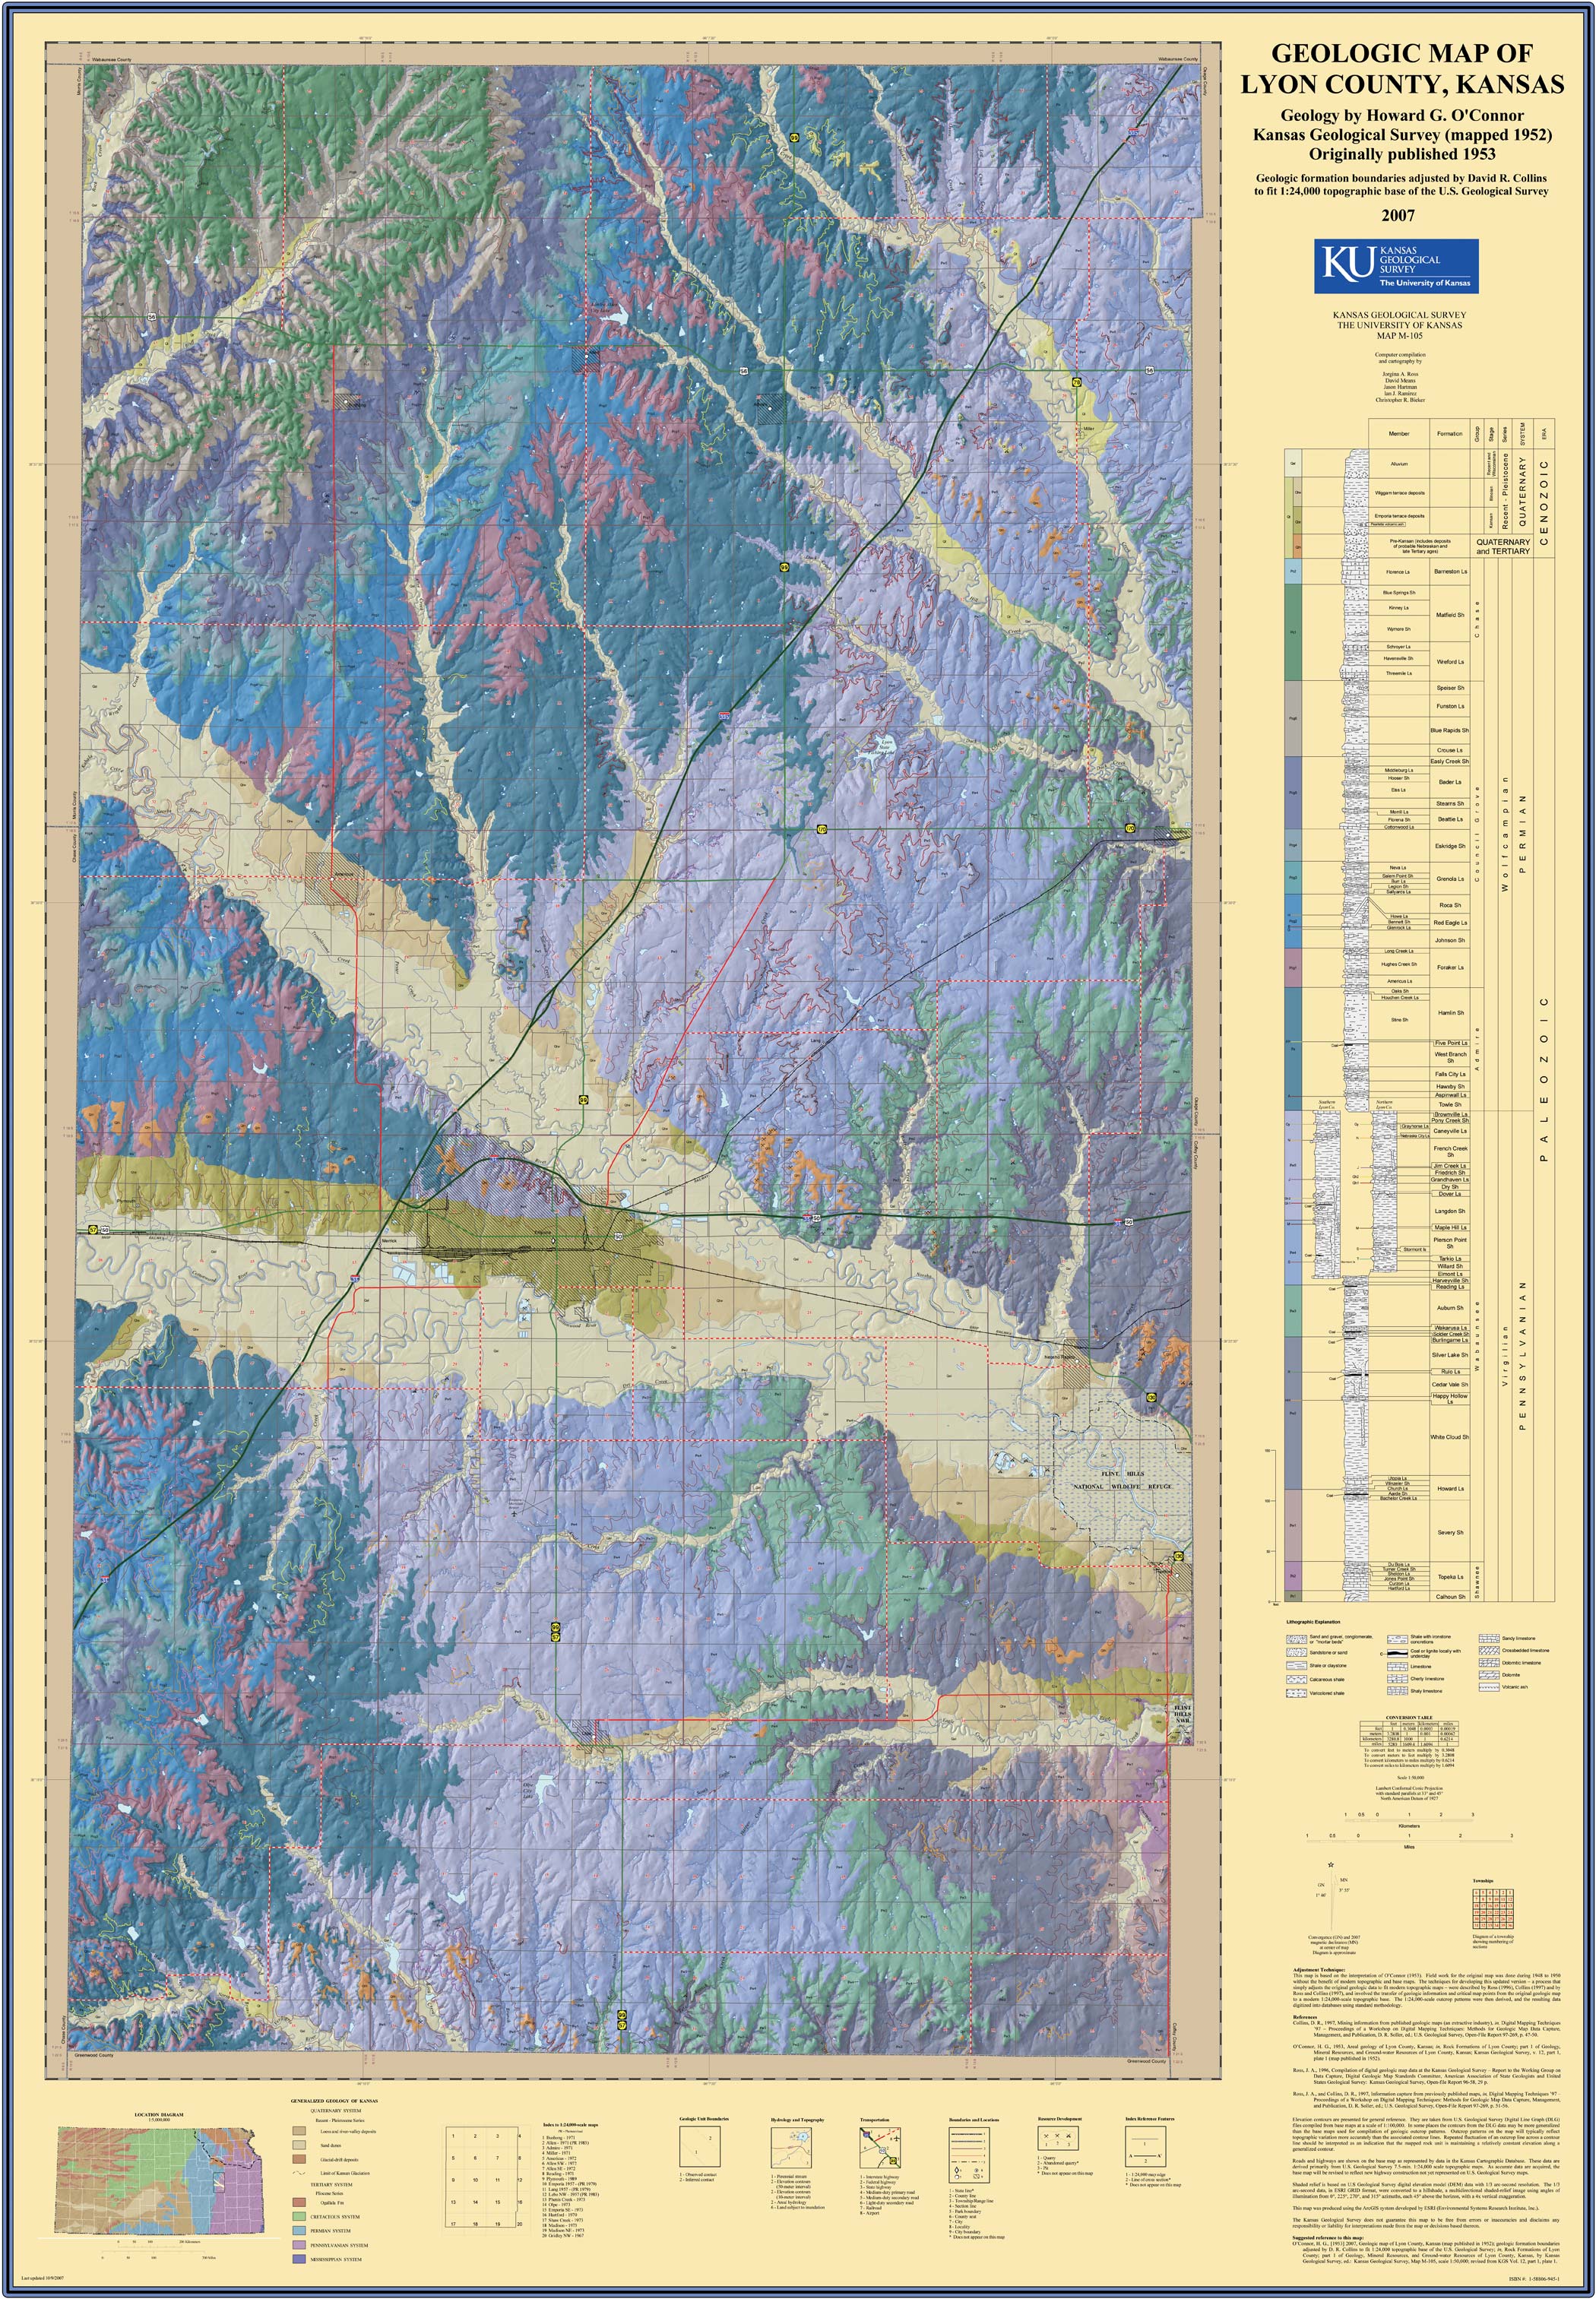 Lyon County geologic map